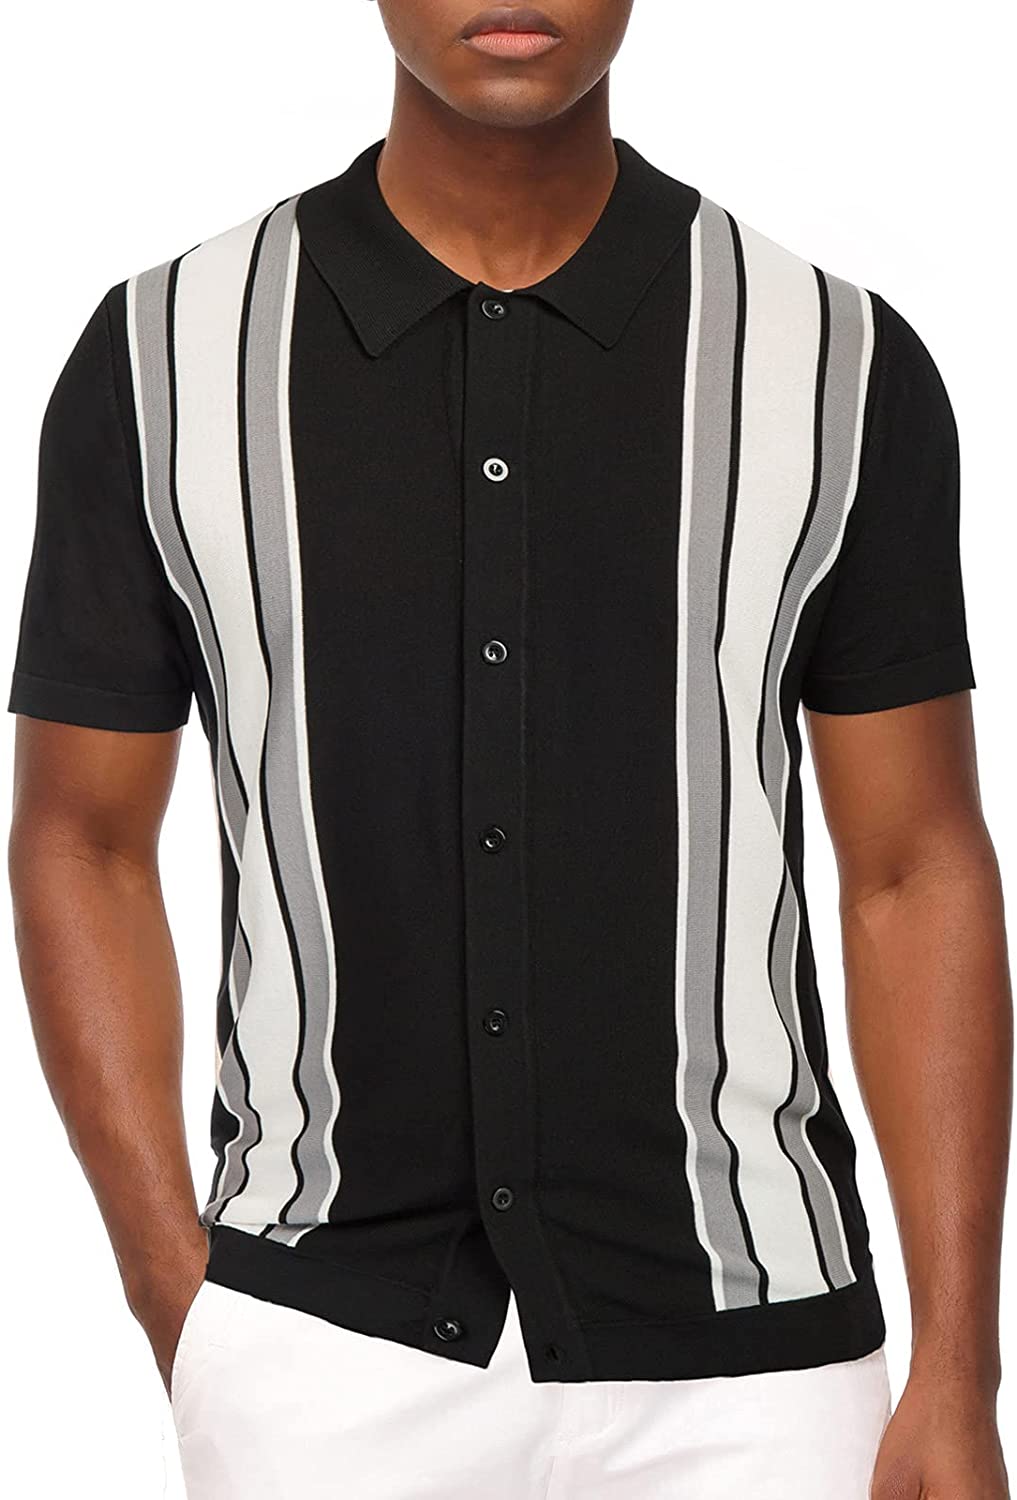 PJ PAUL JONES Men Striped Polo Shirt Vintage 60s Long and Short Sleeve Cardigans 